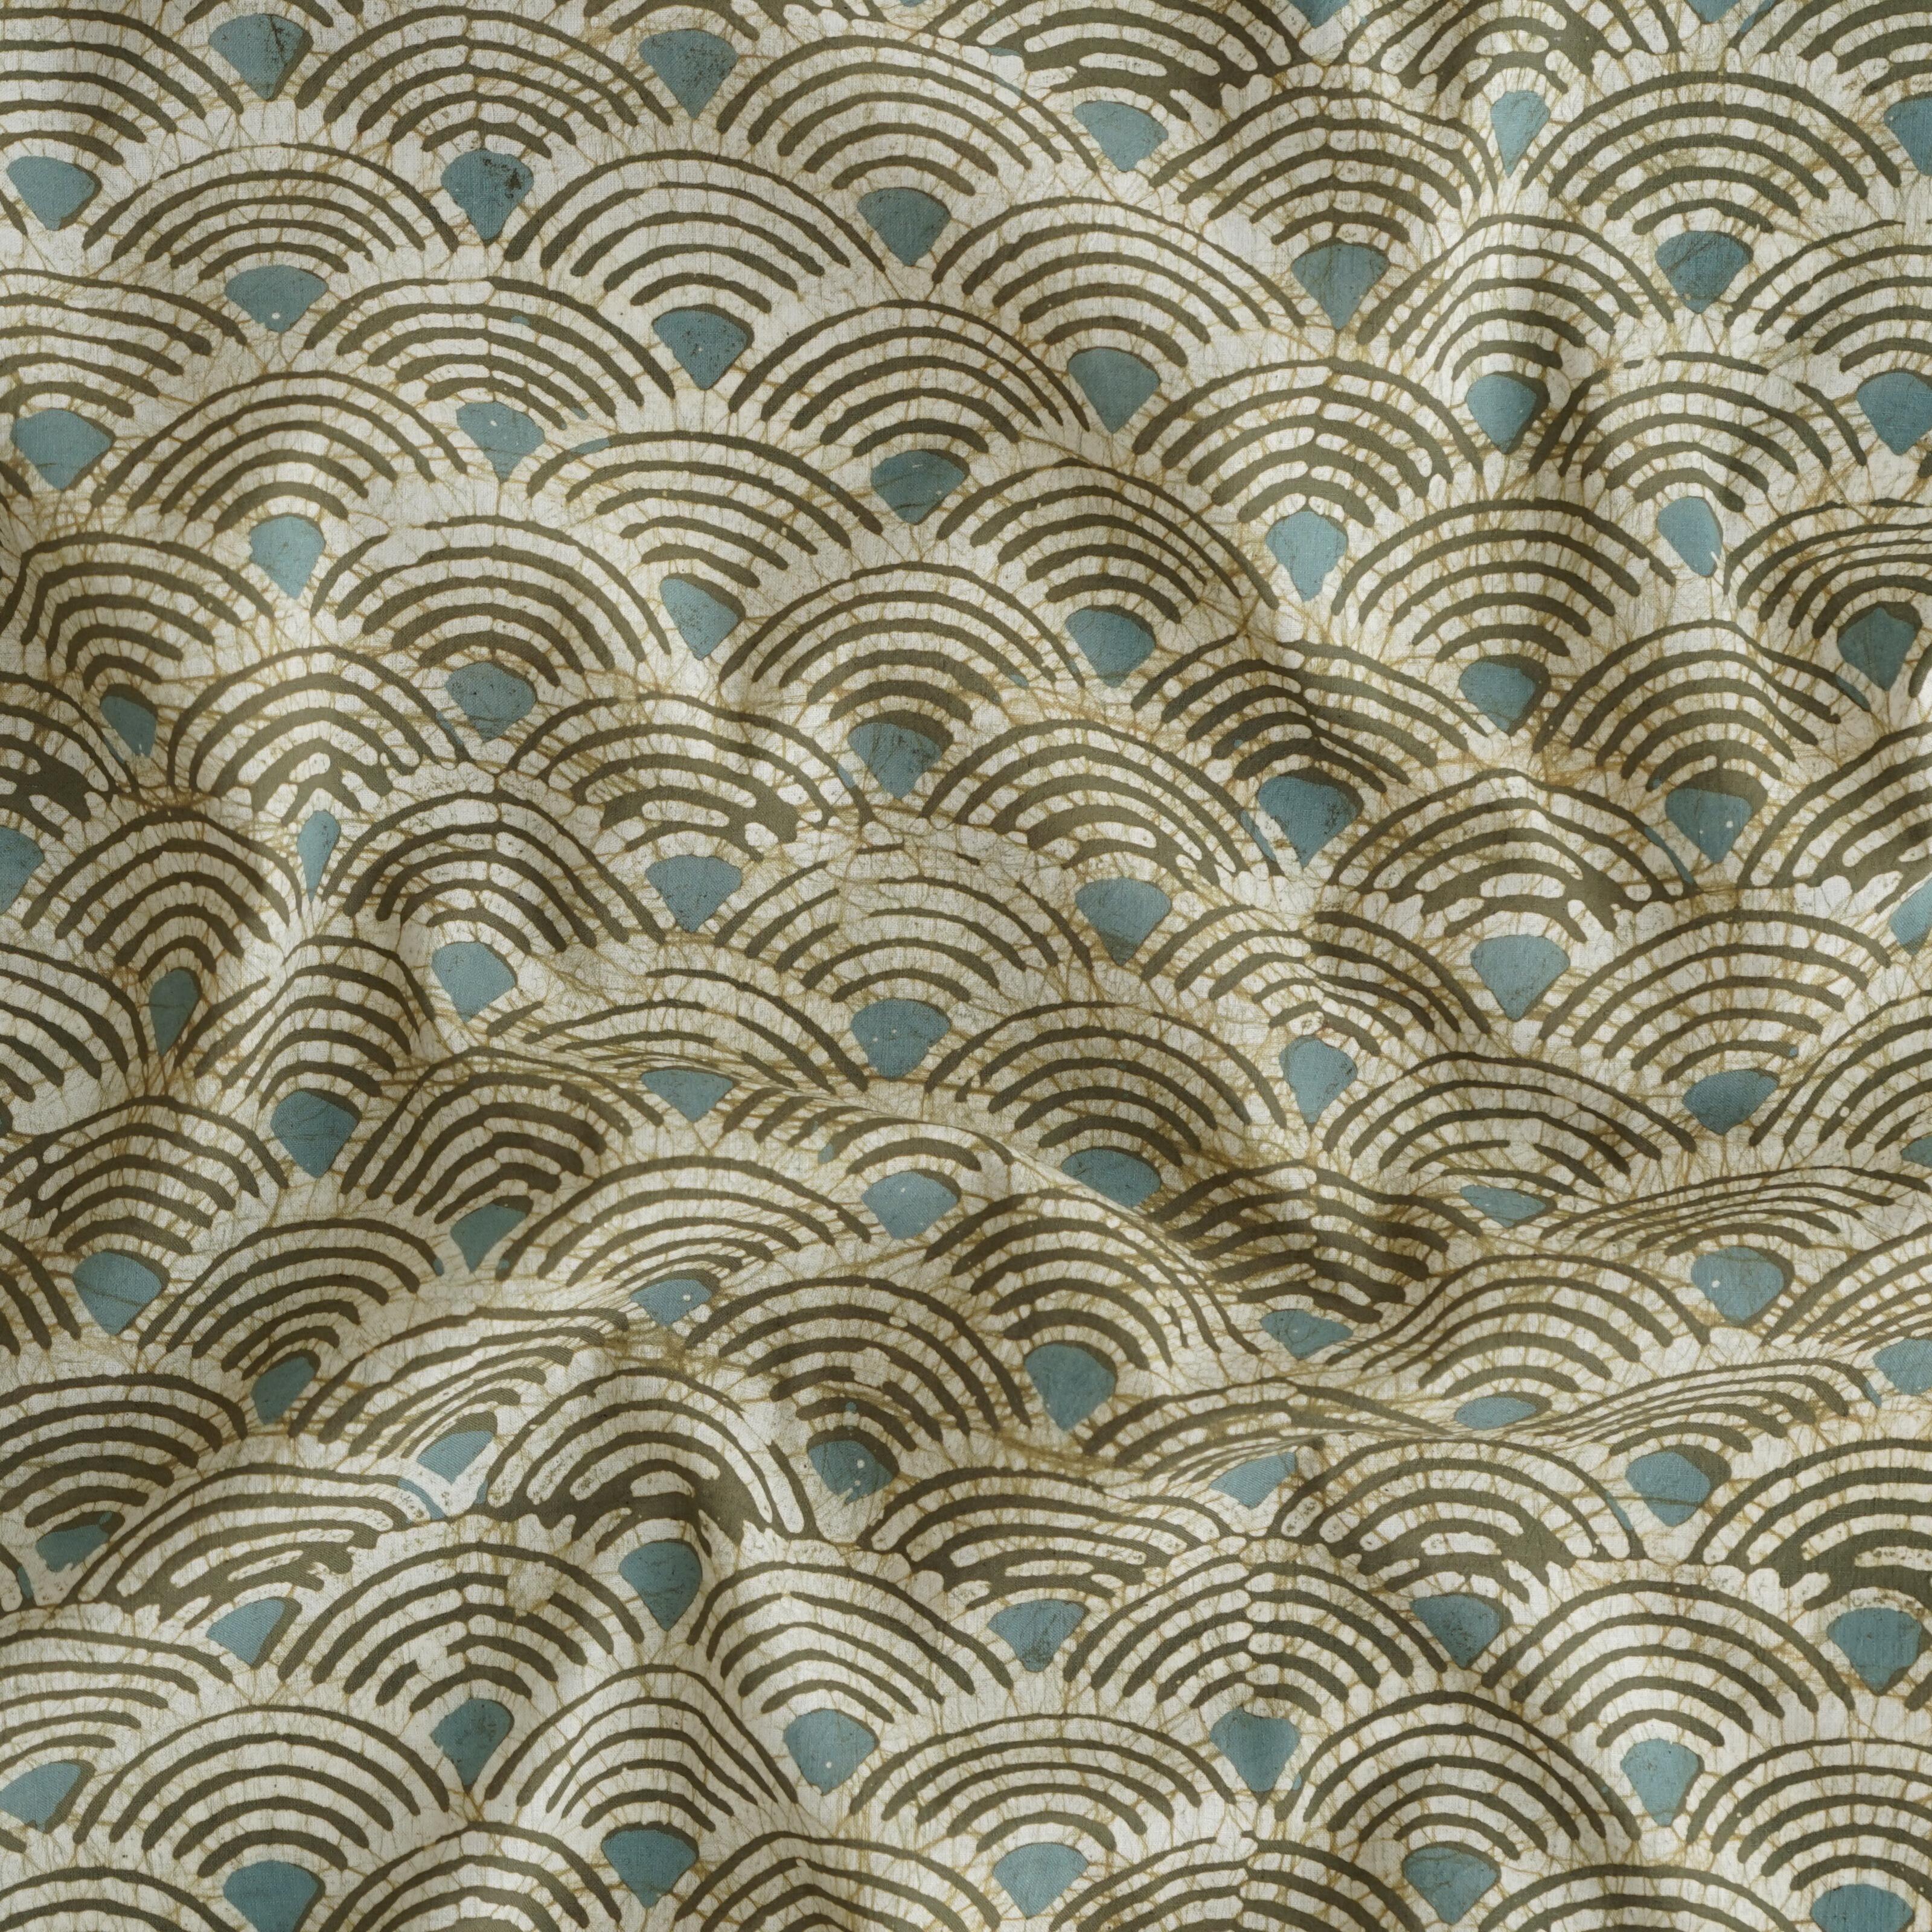 Block-Printed Batik Fabric - Cotton Cloth - Reactive Dyes - Connected Design - Contrast